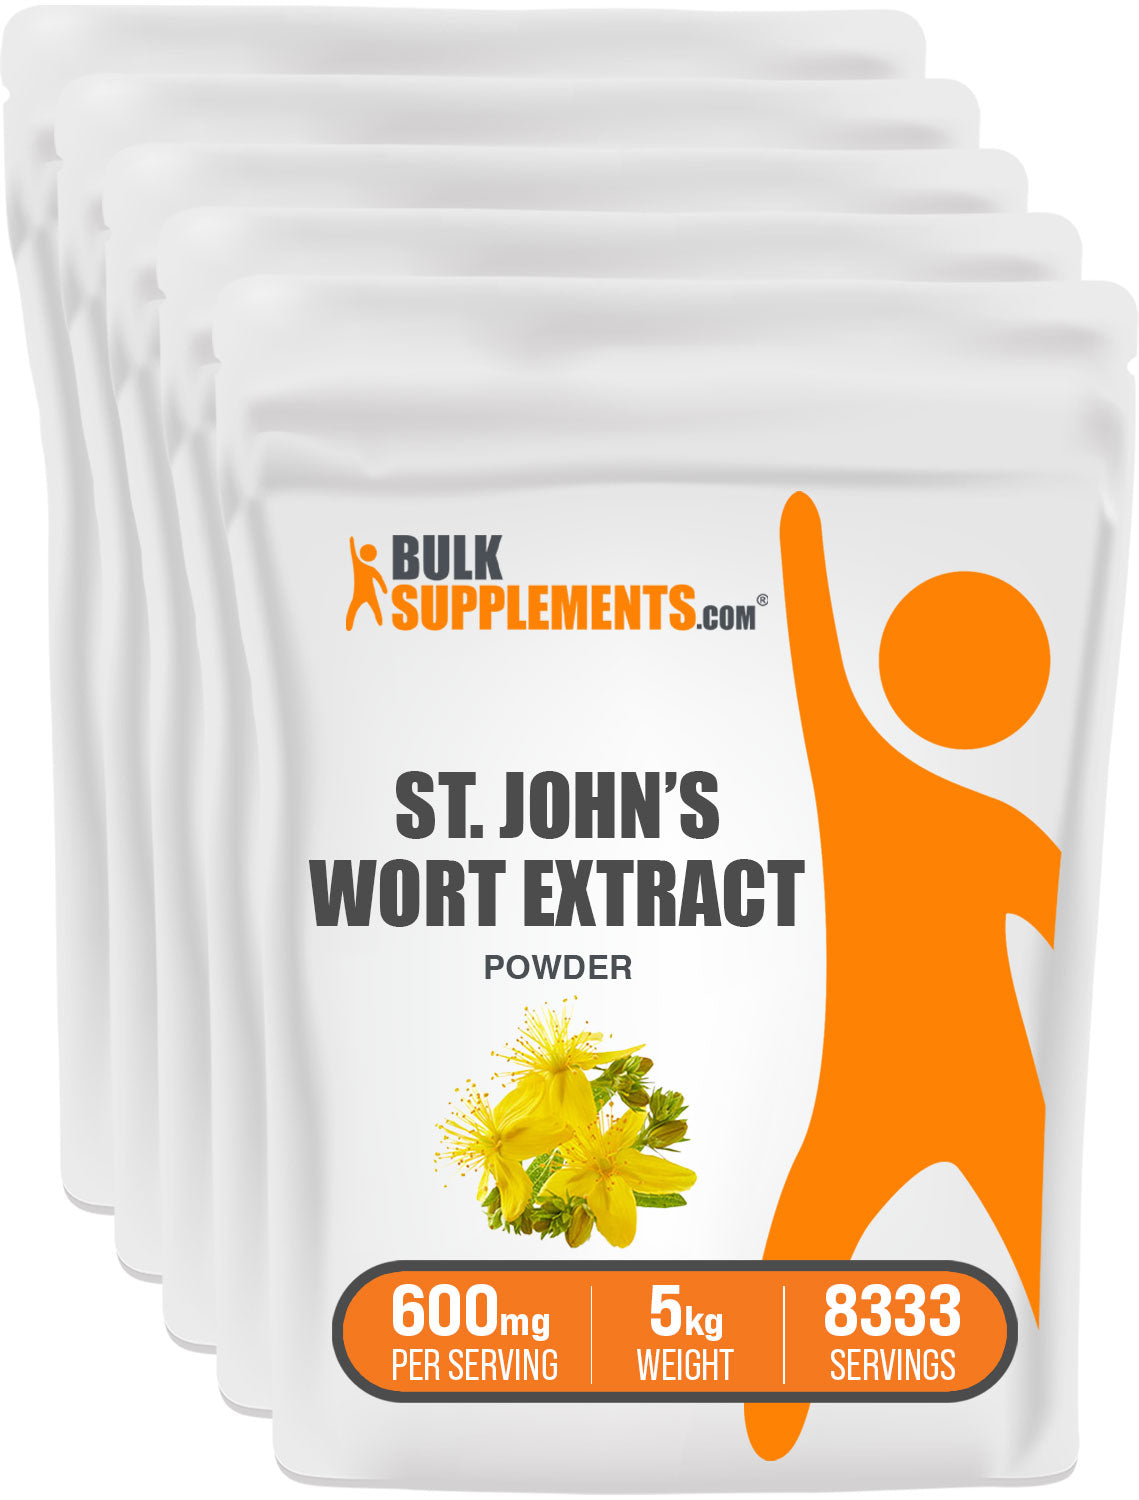 BulkSupplements St. John's Wort Extract Powder 5kg bag